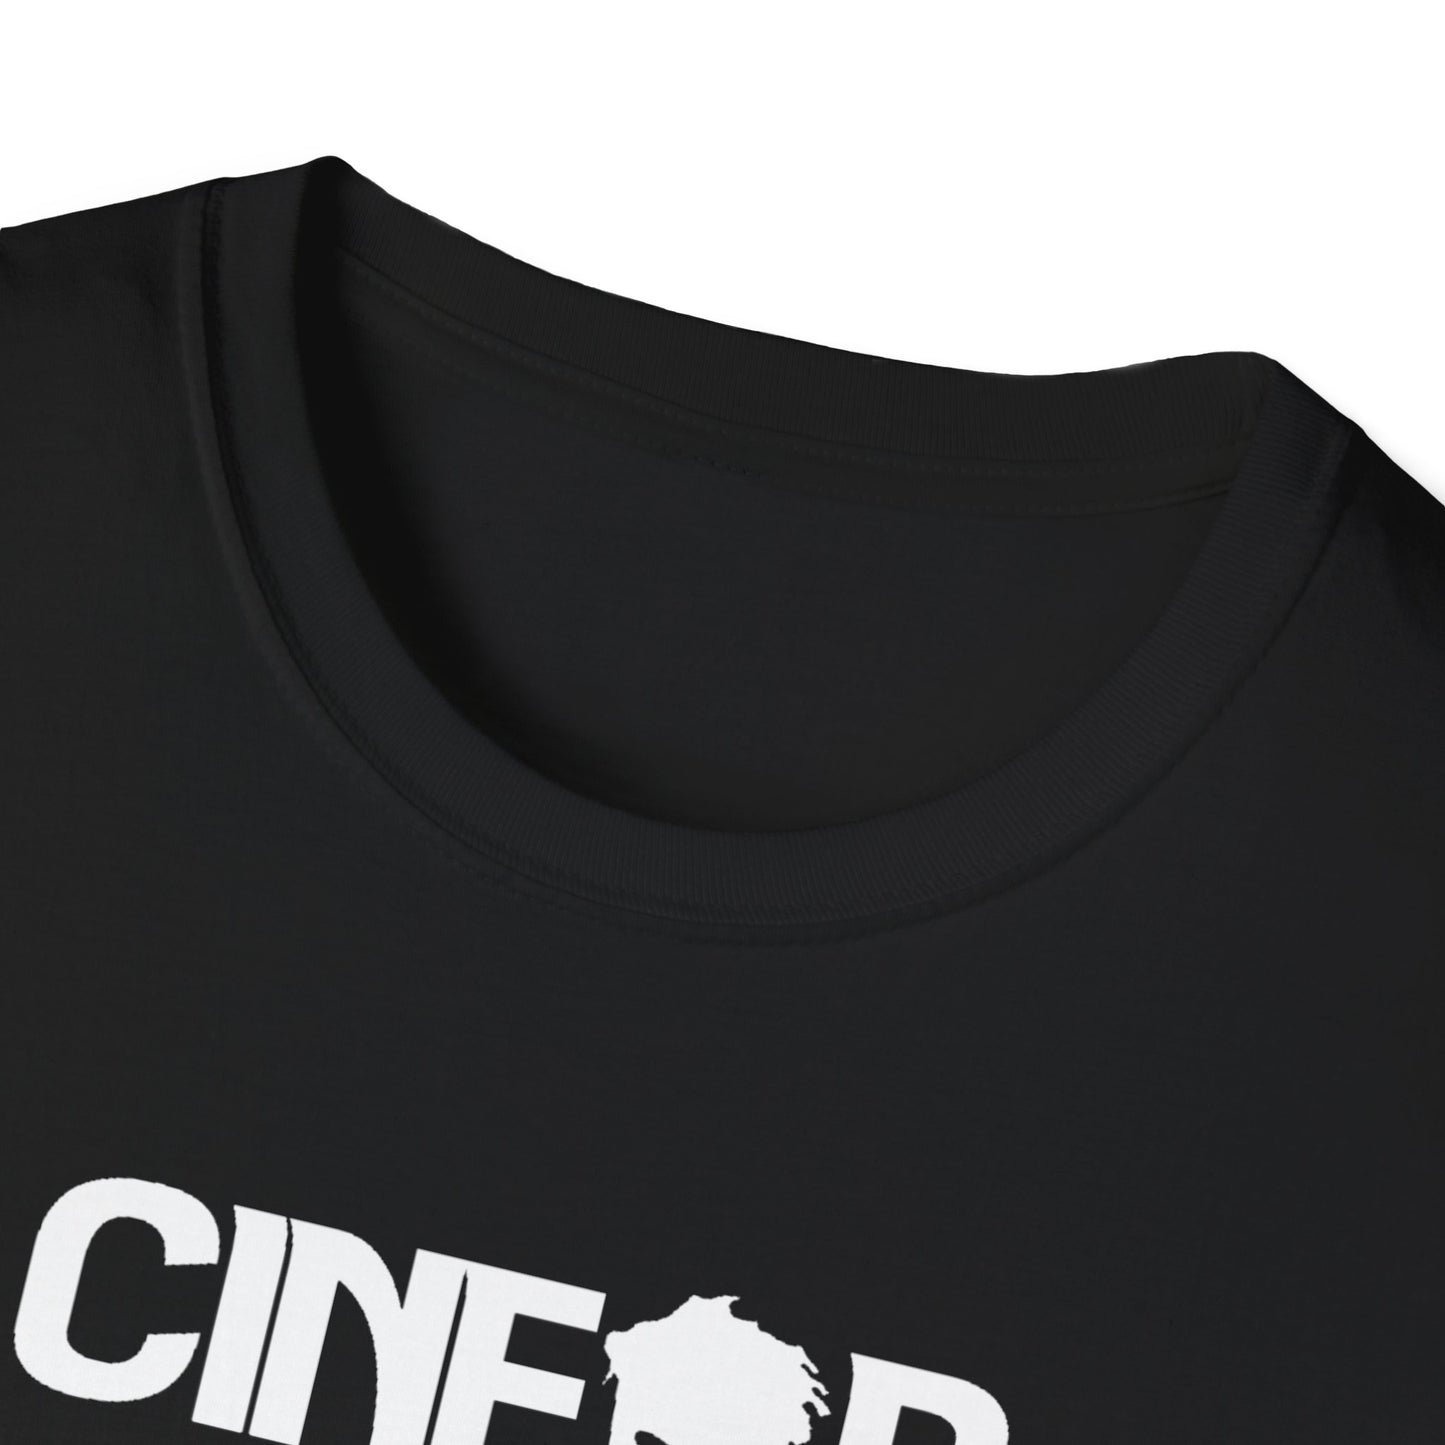 Cineor goes black & white